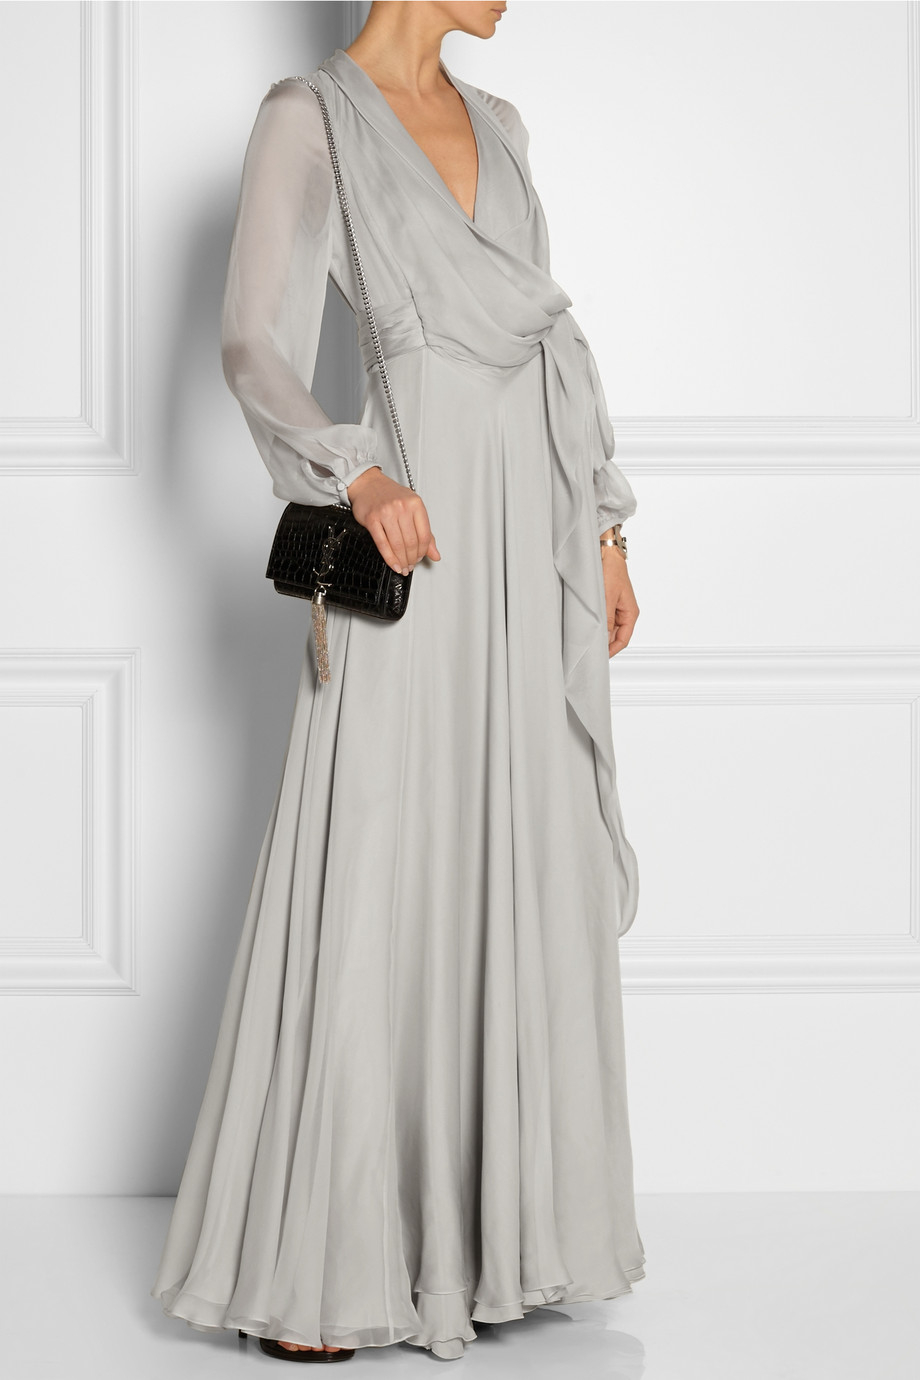 Lyst - Saint laurent Wrap-Effect Silk-Mousseline Gown in Gray